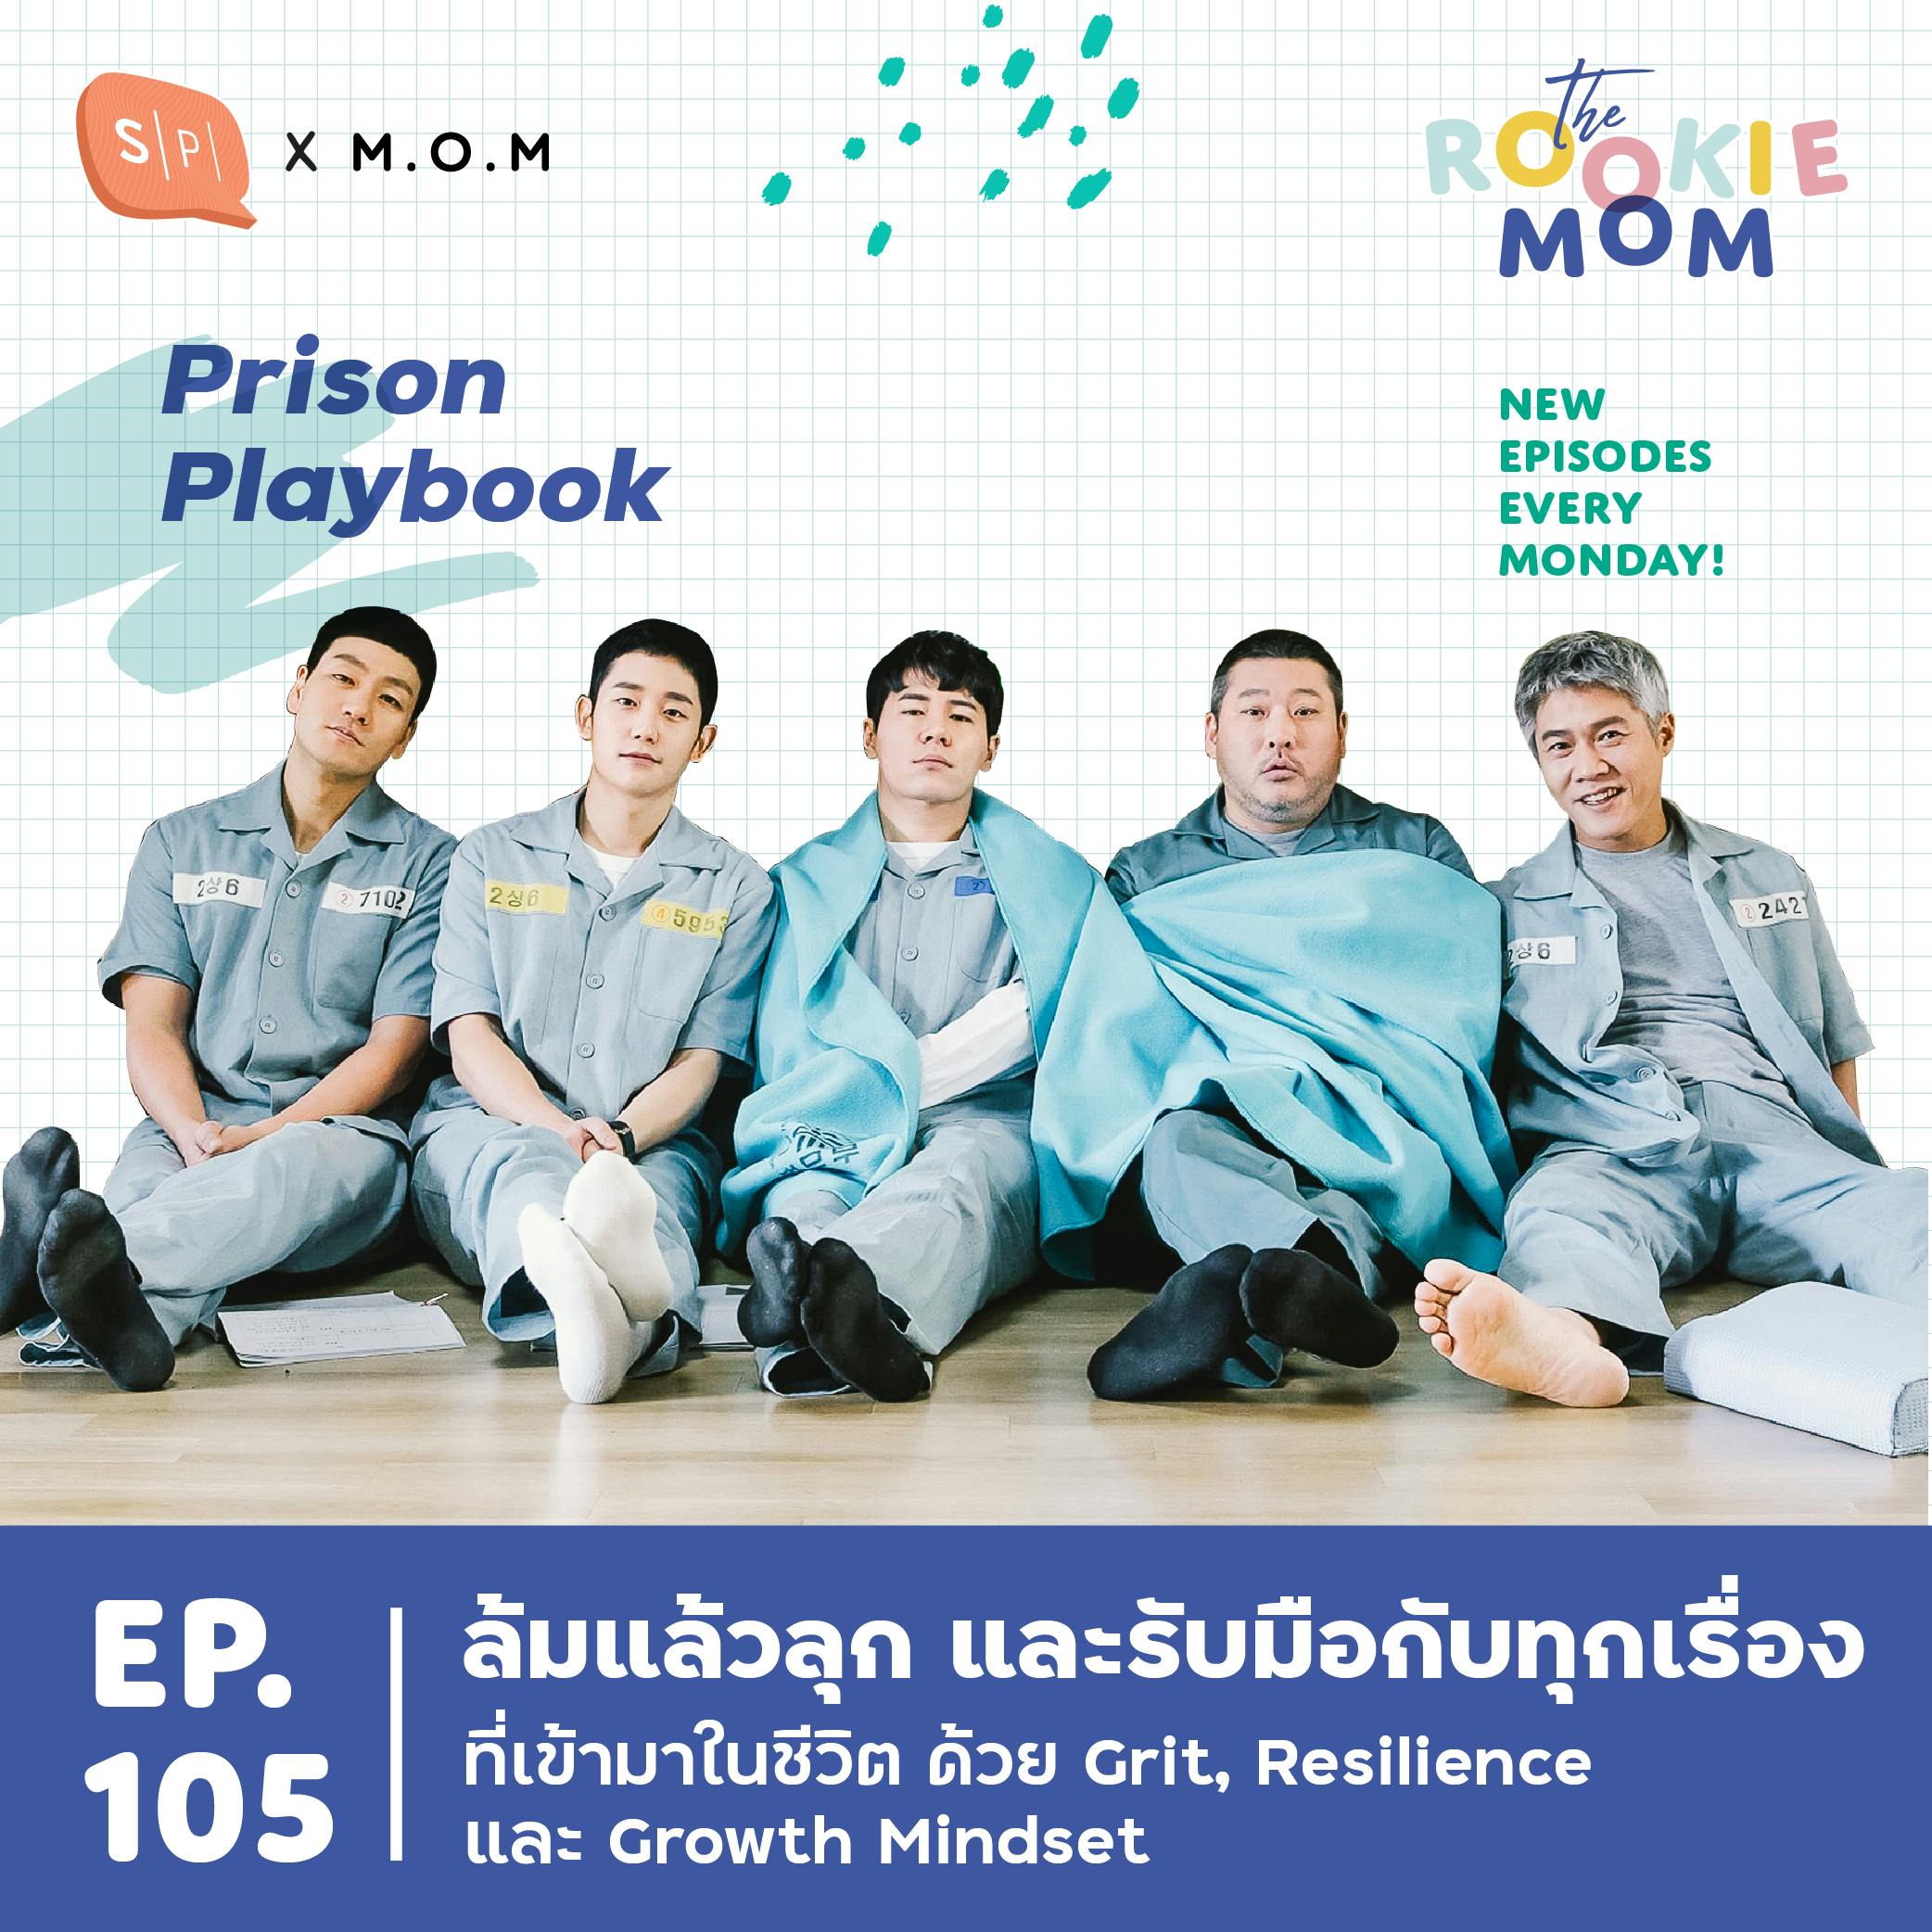 Prison Playbook ล้มแล้วลุกและรับมือชีวิตด้วย Grit, Resilience และ Growth Mindset | EP105